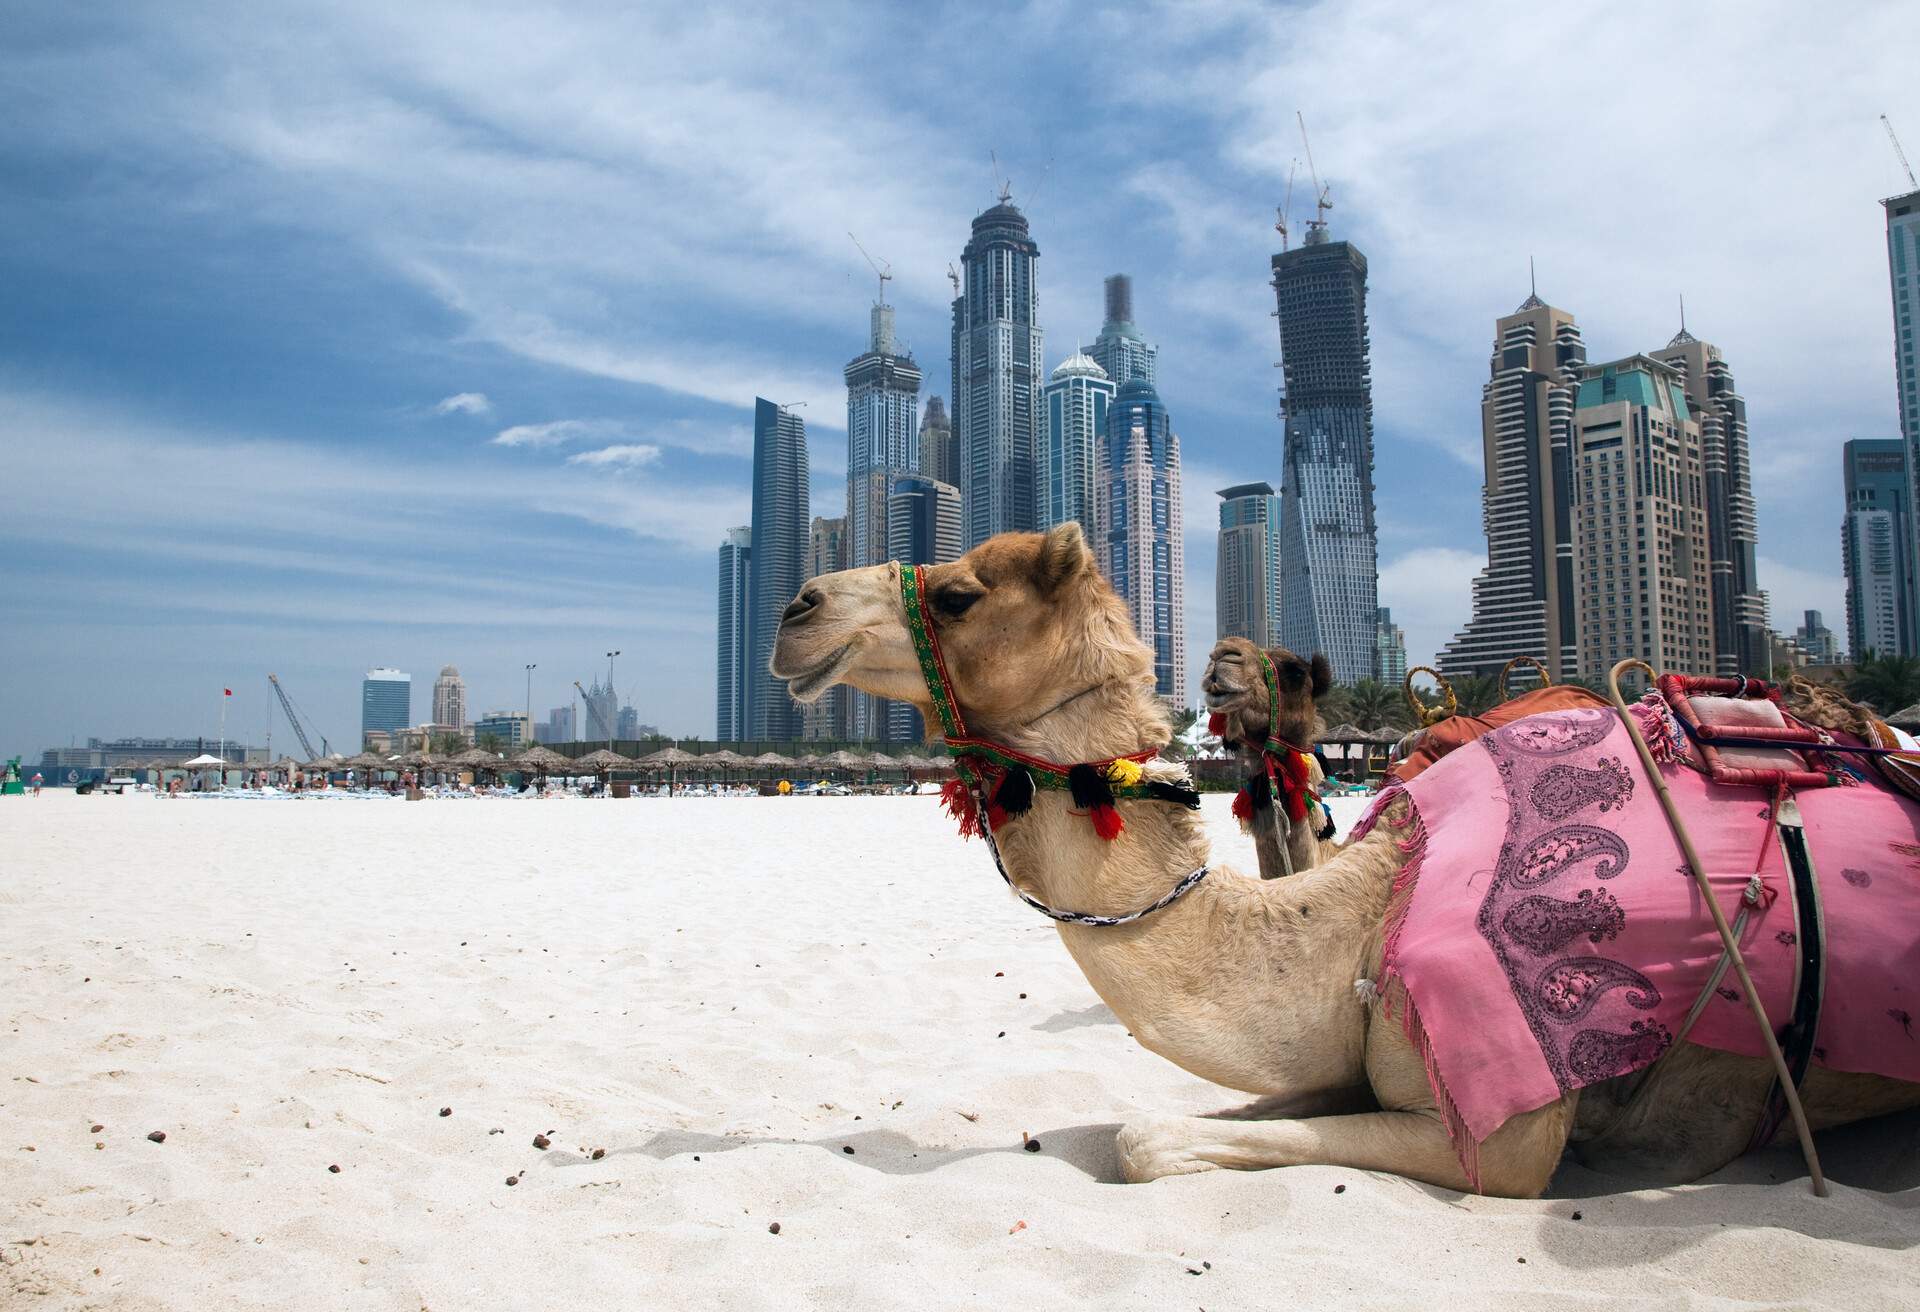 DEST_UNITED-ARAB-EMIRATES_DUBAI_Camel-at-the-urban-background